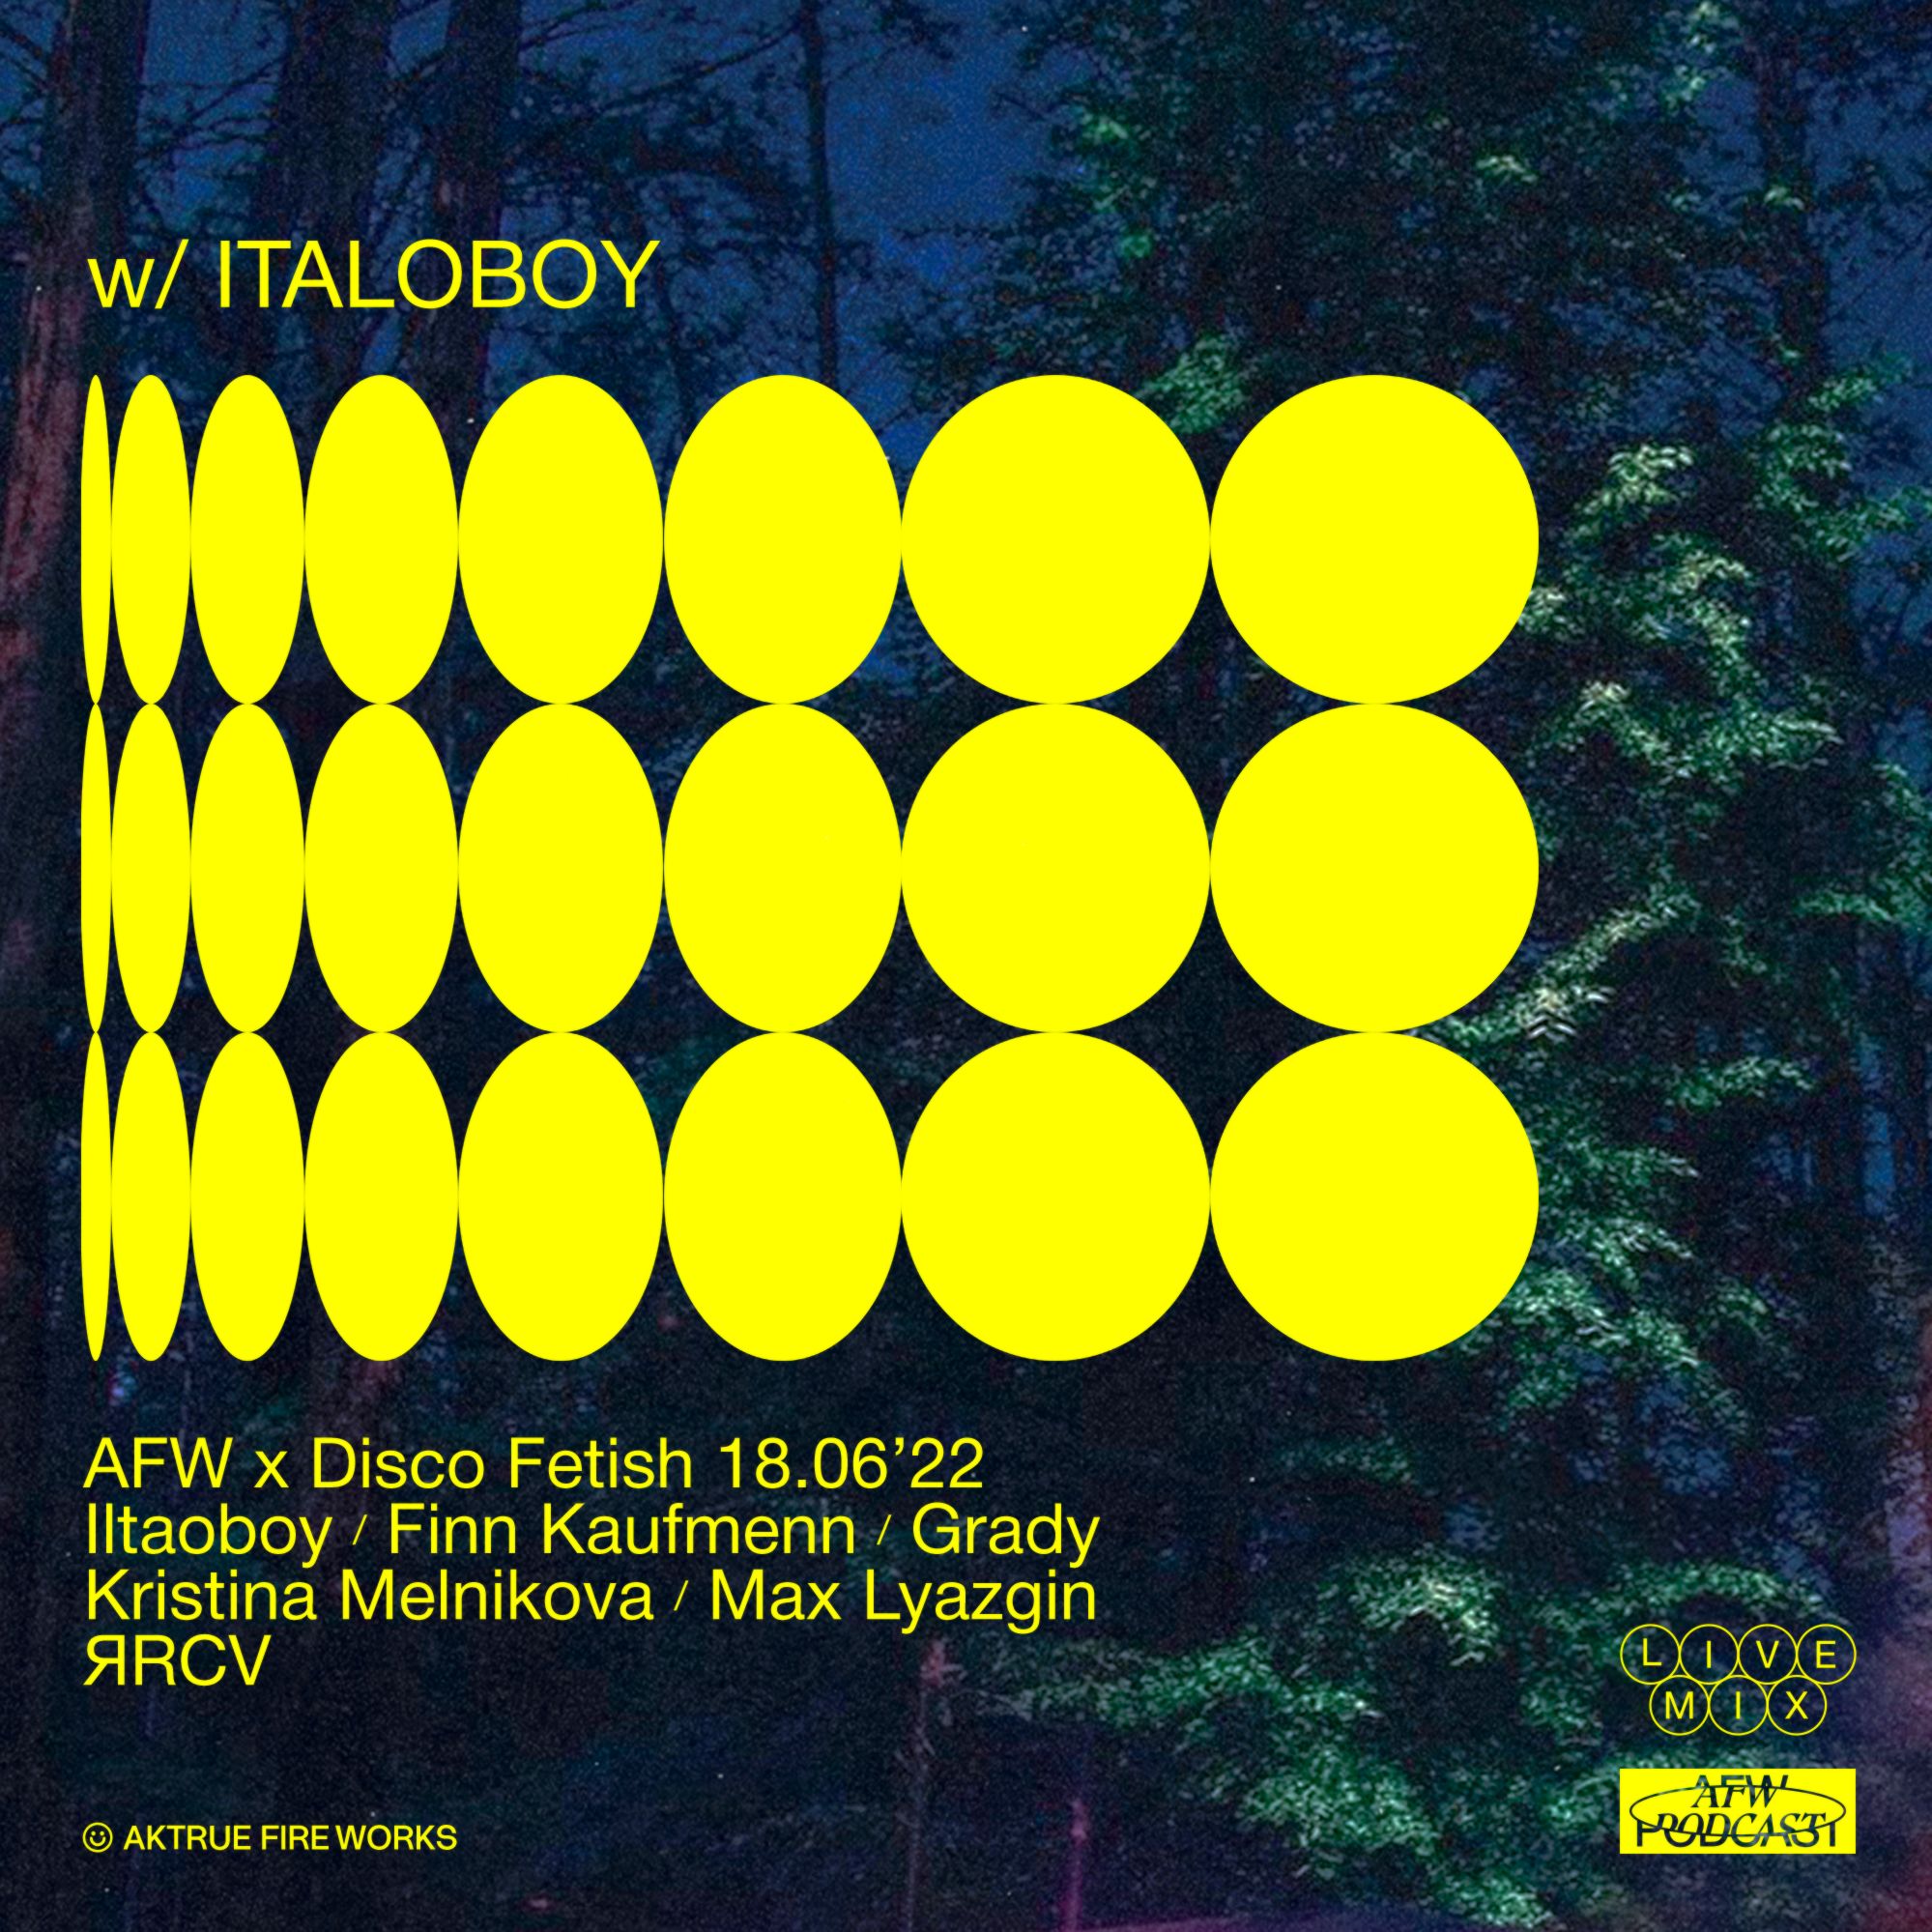 Download AFW x Disco Fetish w/ ITALOBOY 18.06'22